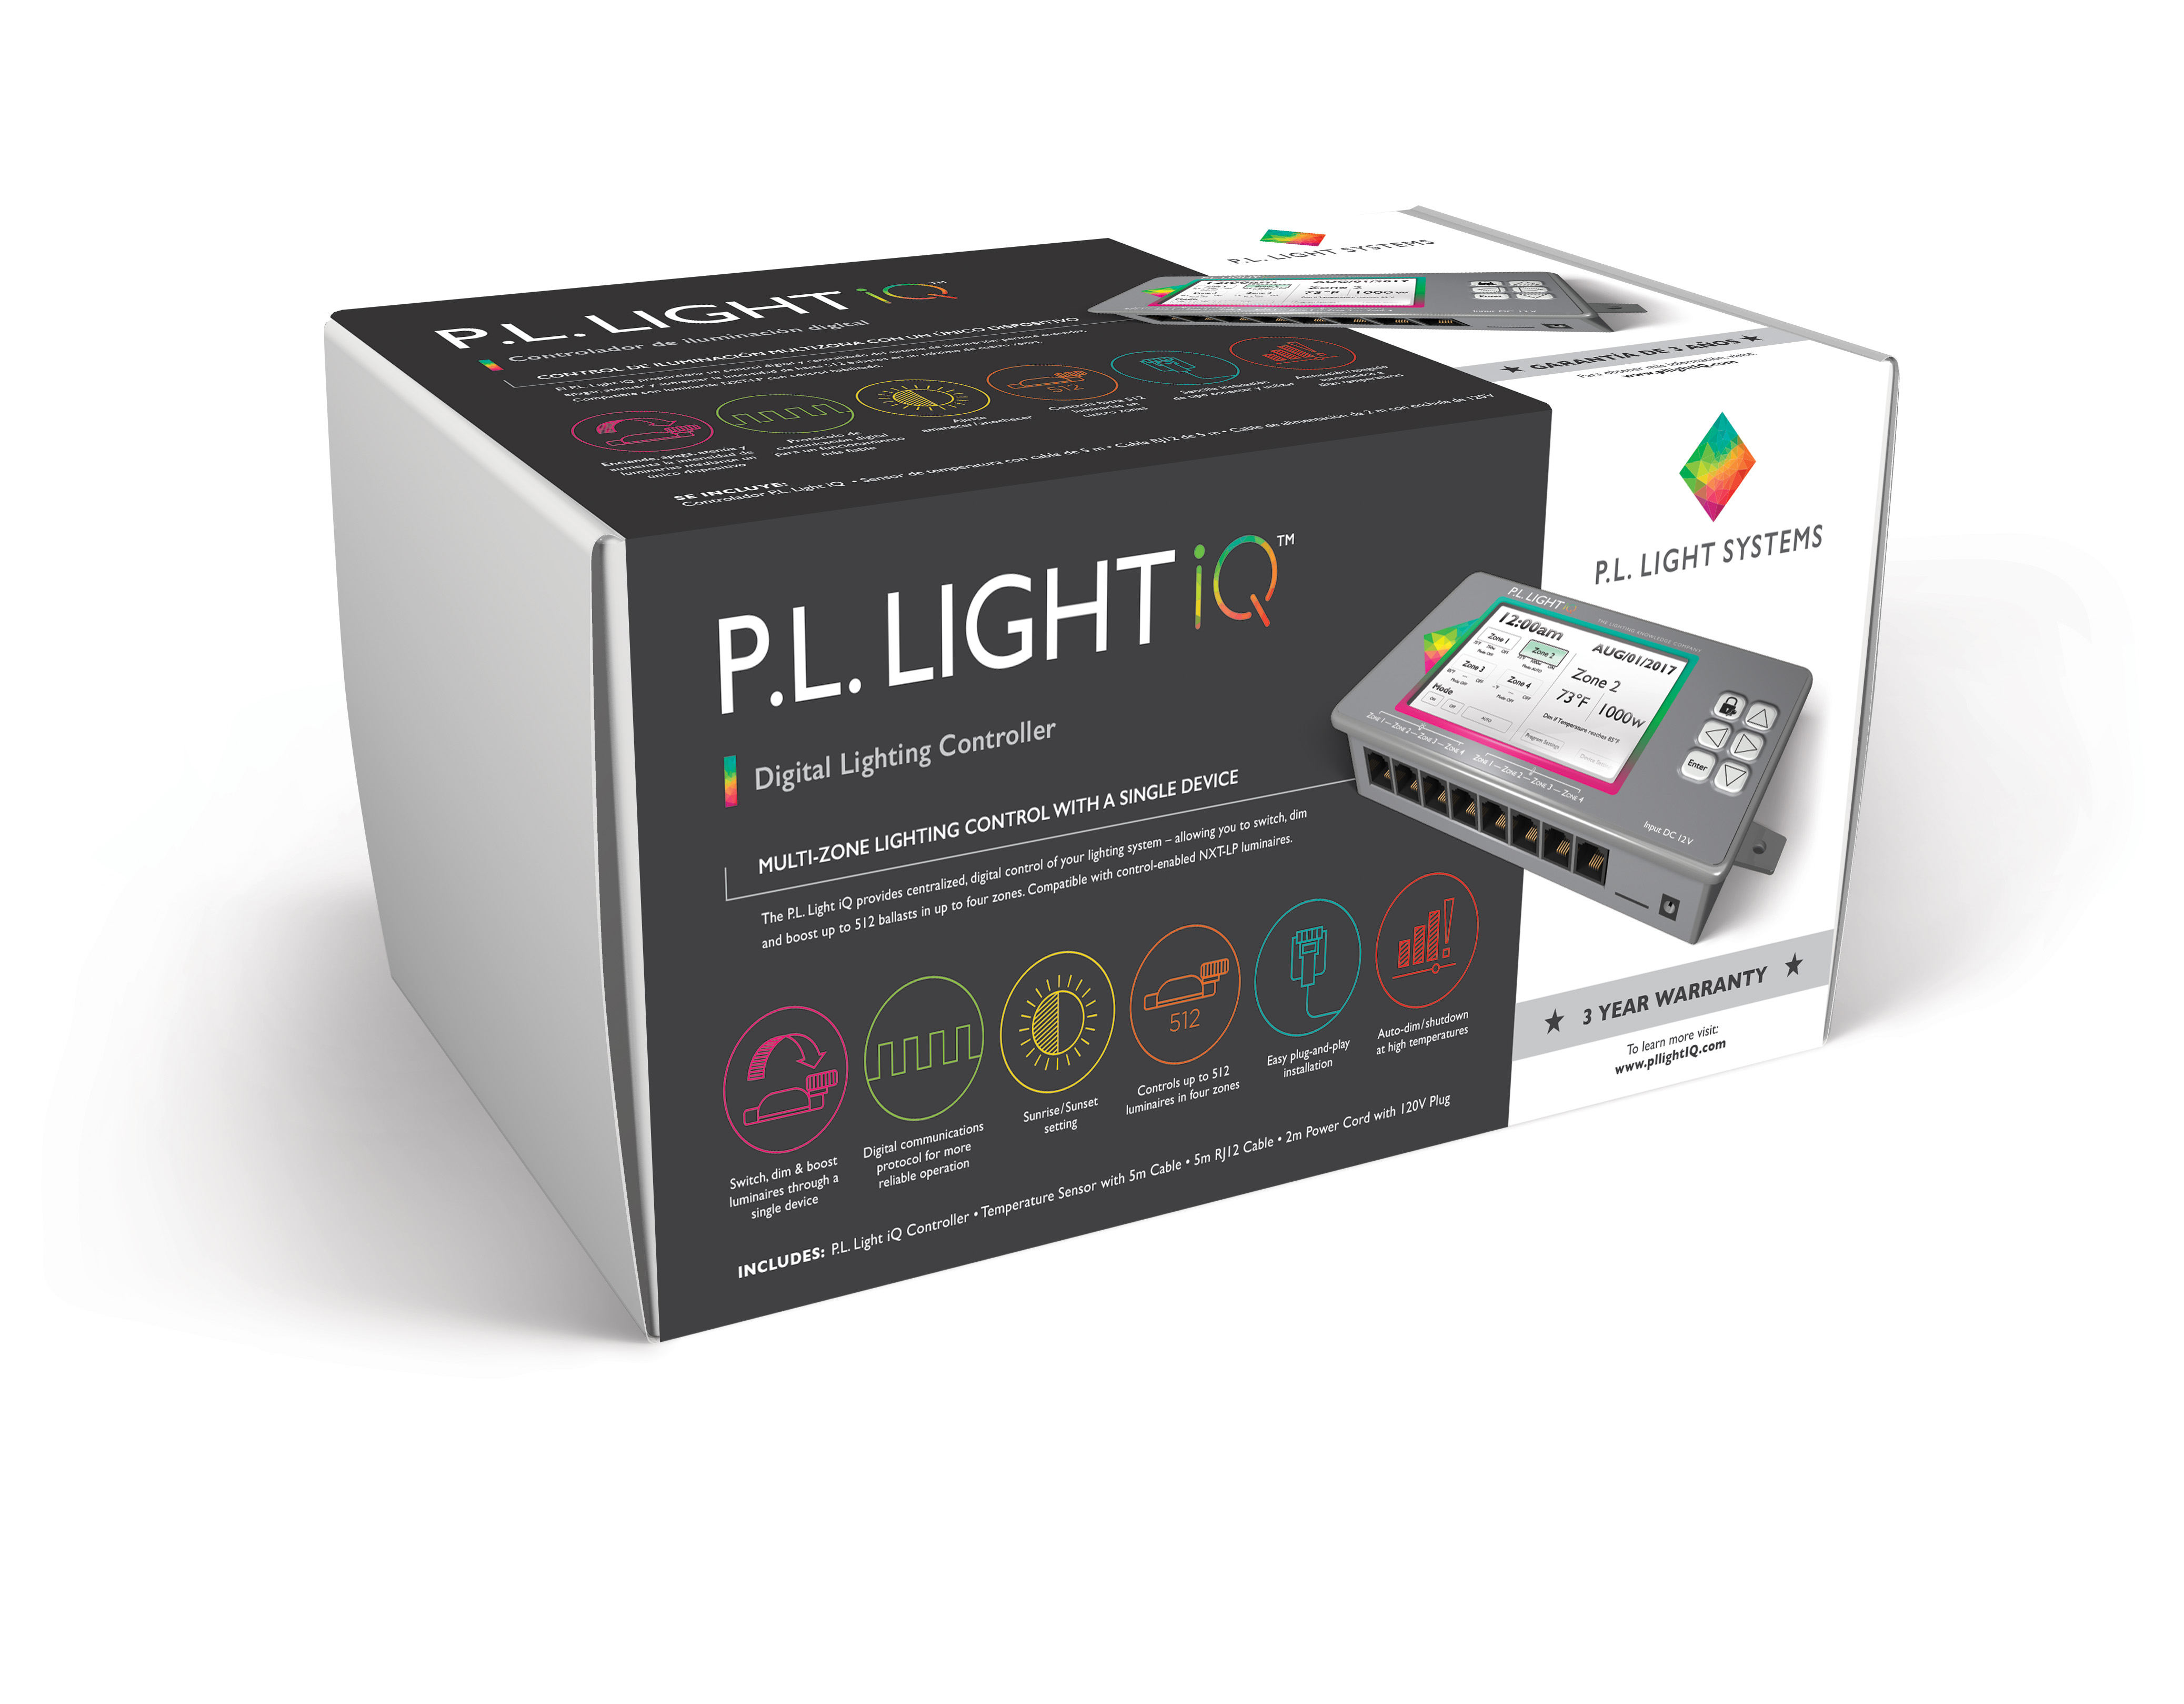 P.L. Light iQ - packaging